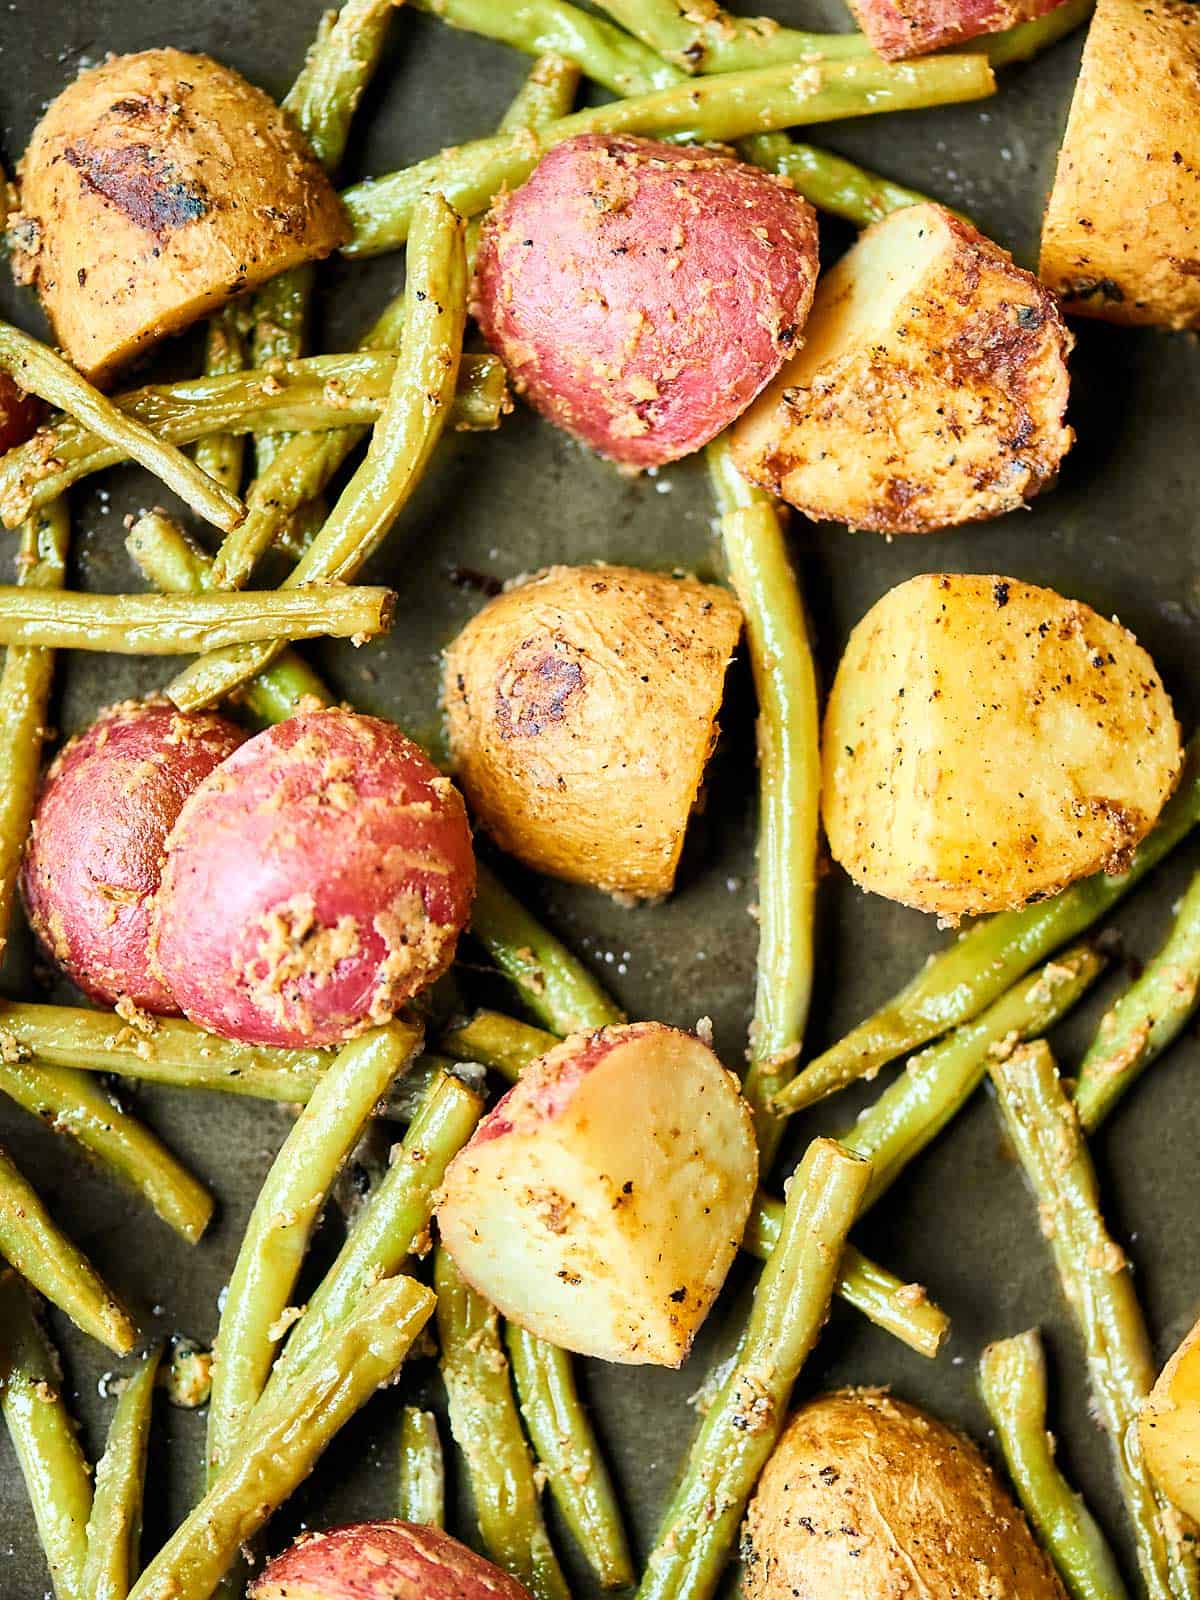 Roasted Potatoes and Green Beans Recipe - w/ Dijon